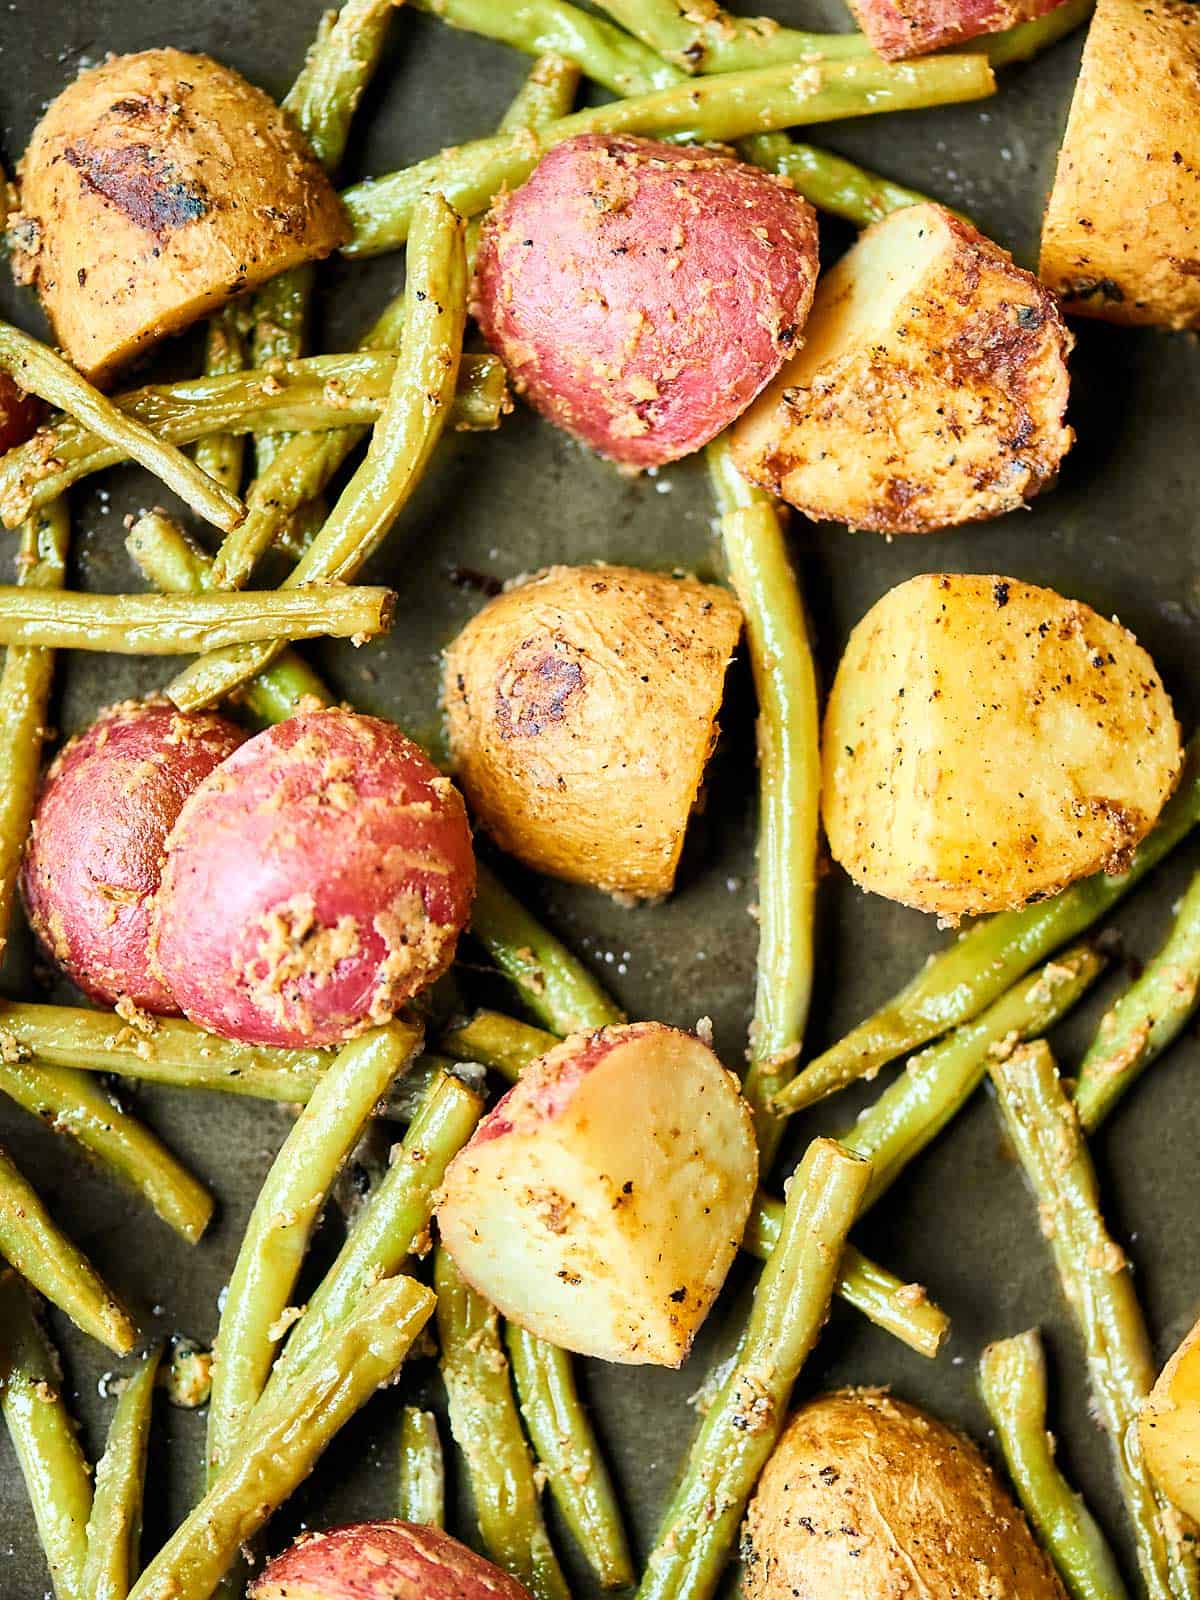 Roasted Potatoes and Green Beans Recipe - w/ Dijon